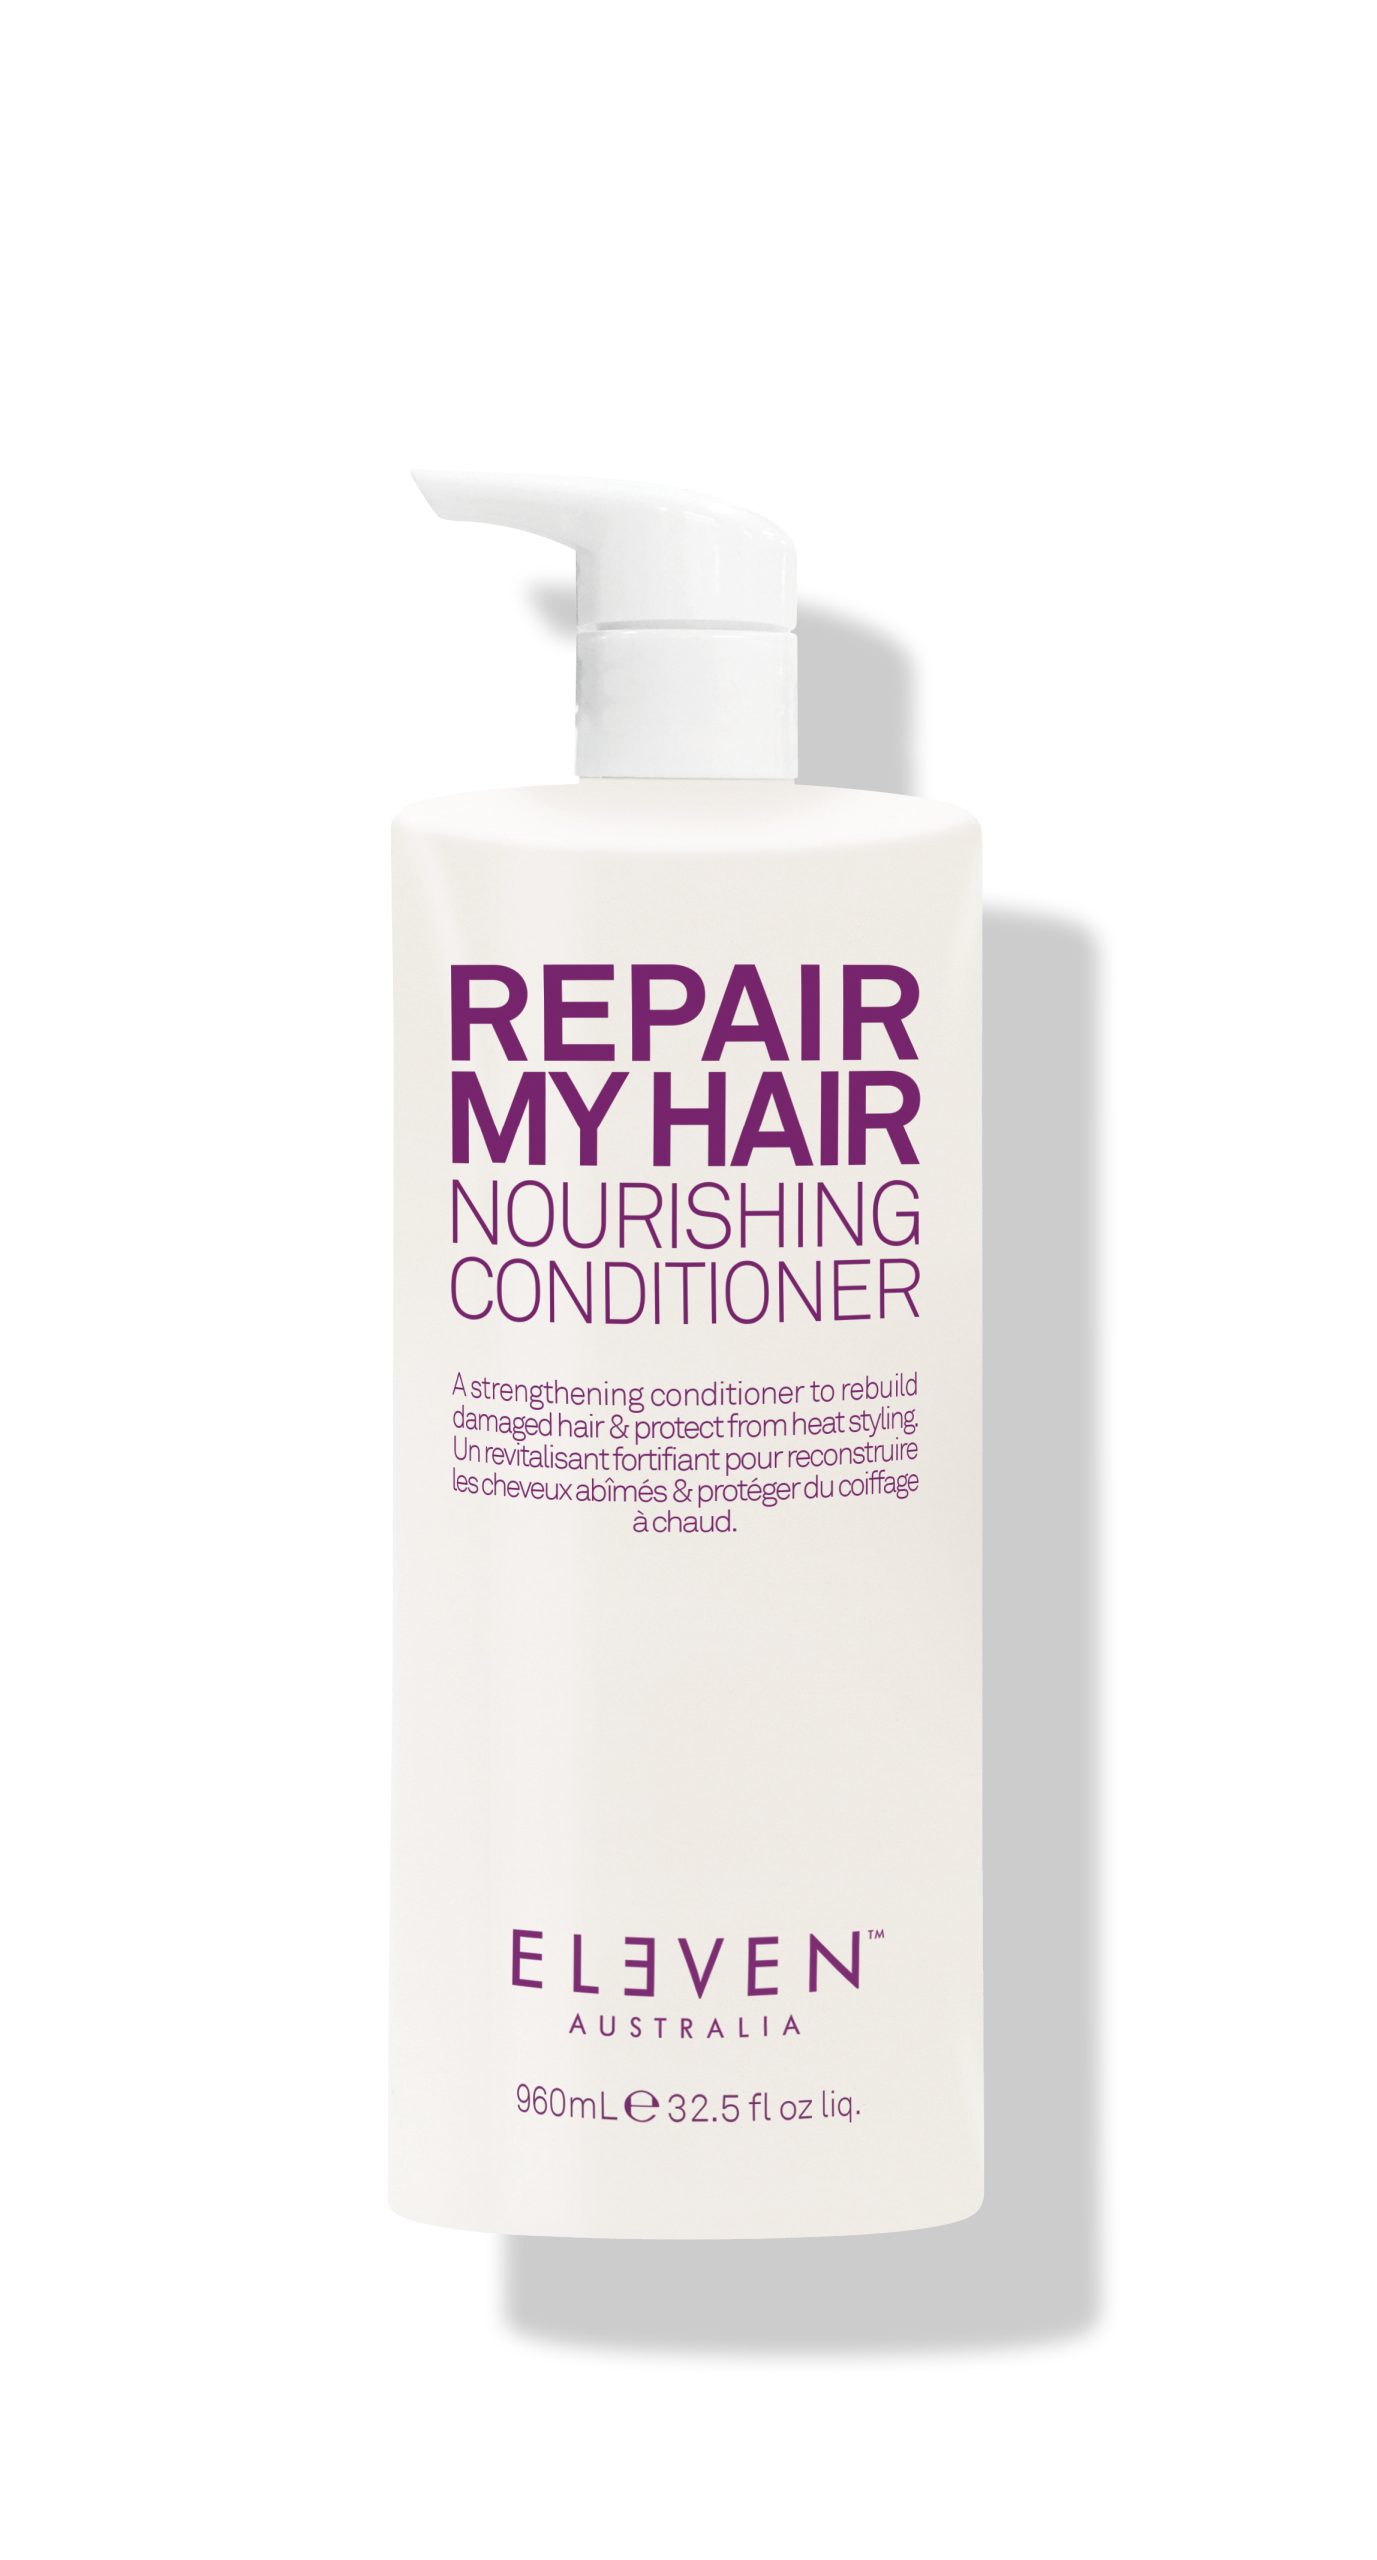 ELEVEN Australia Repair My Hair Nourishing Conditioner 960ml